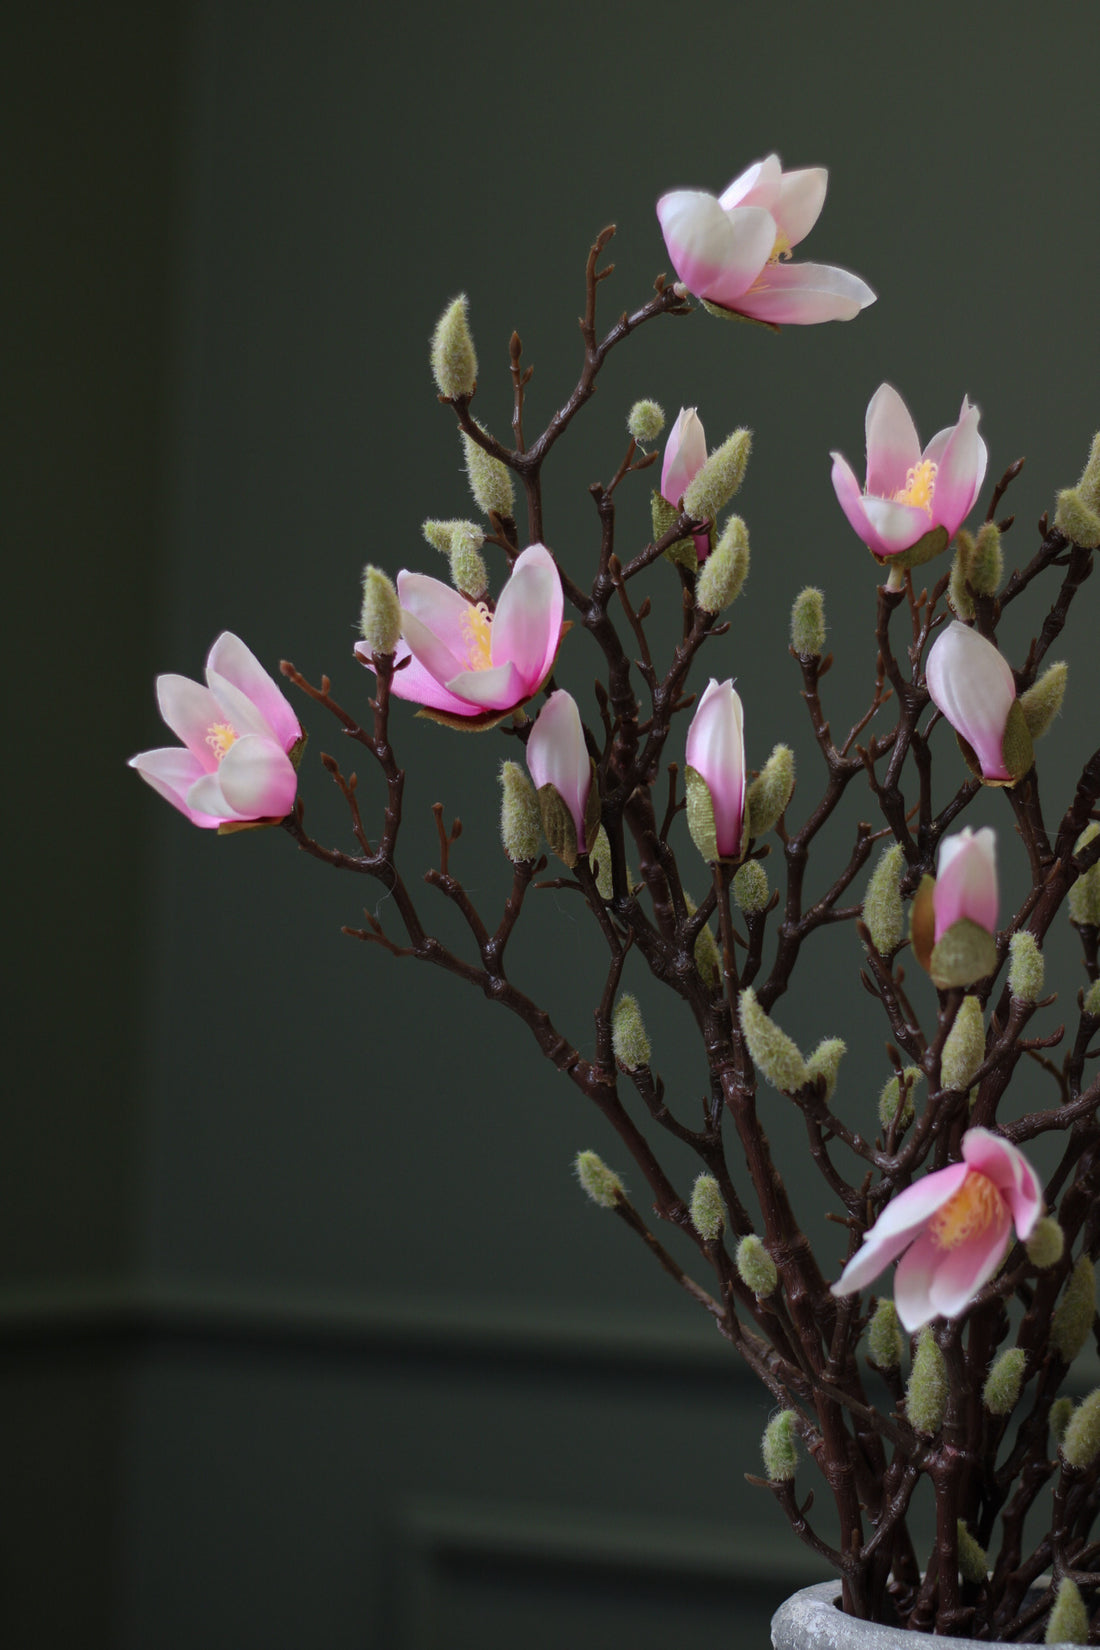 Pale Pink Magnolia Stem